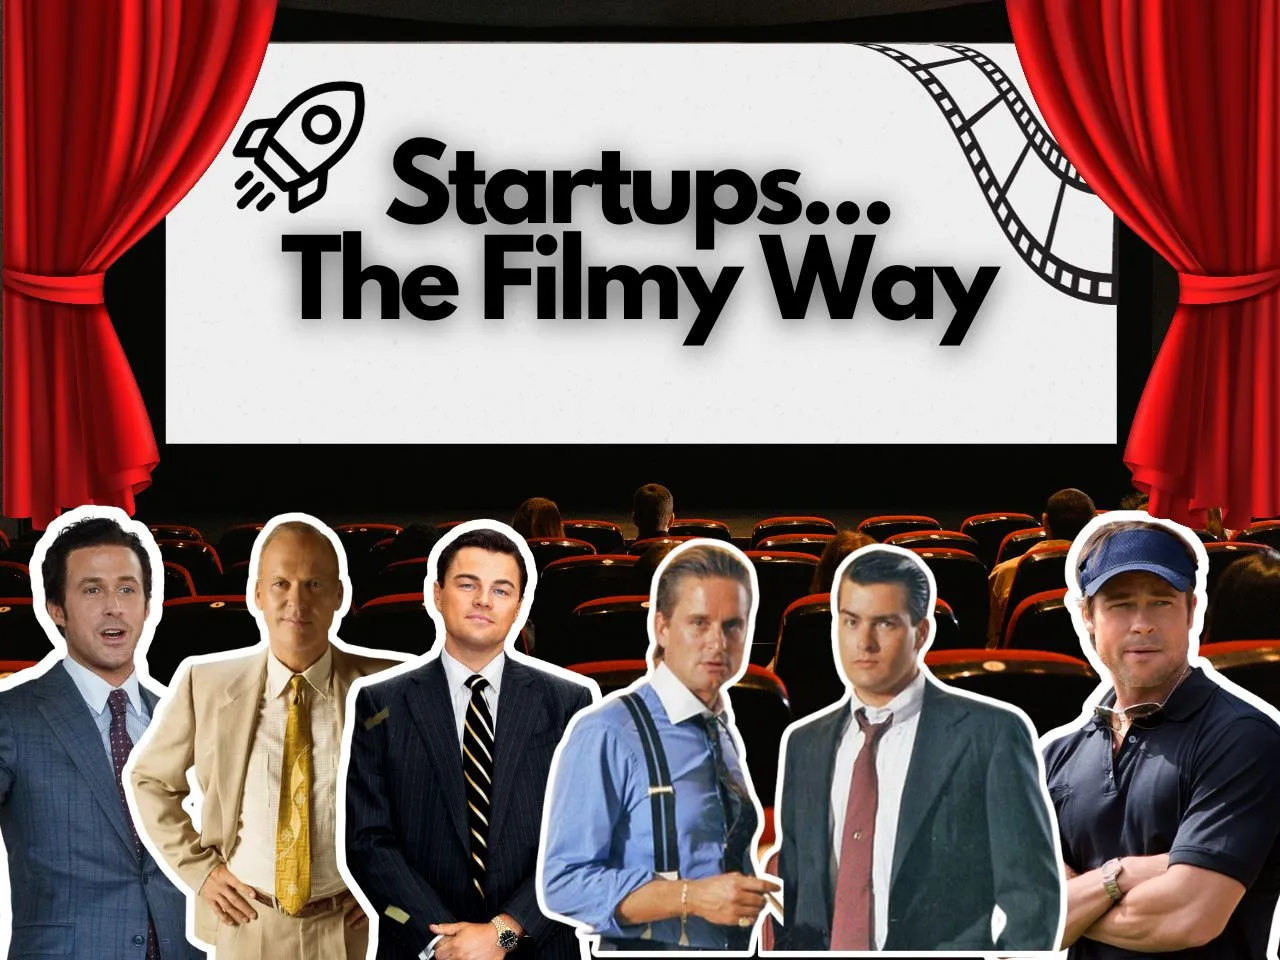 Hollywood Startup Films Every Aspiring Entrepreneur Should Watch